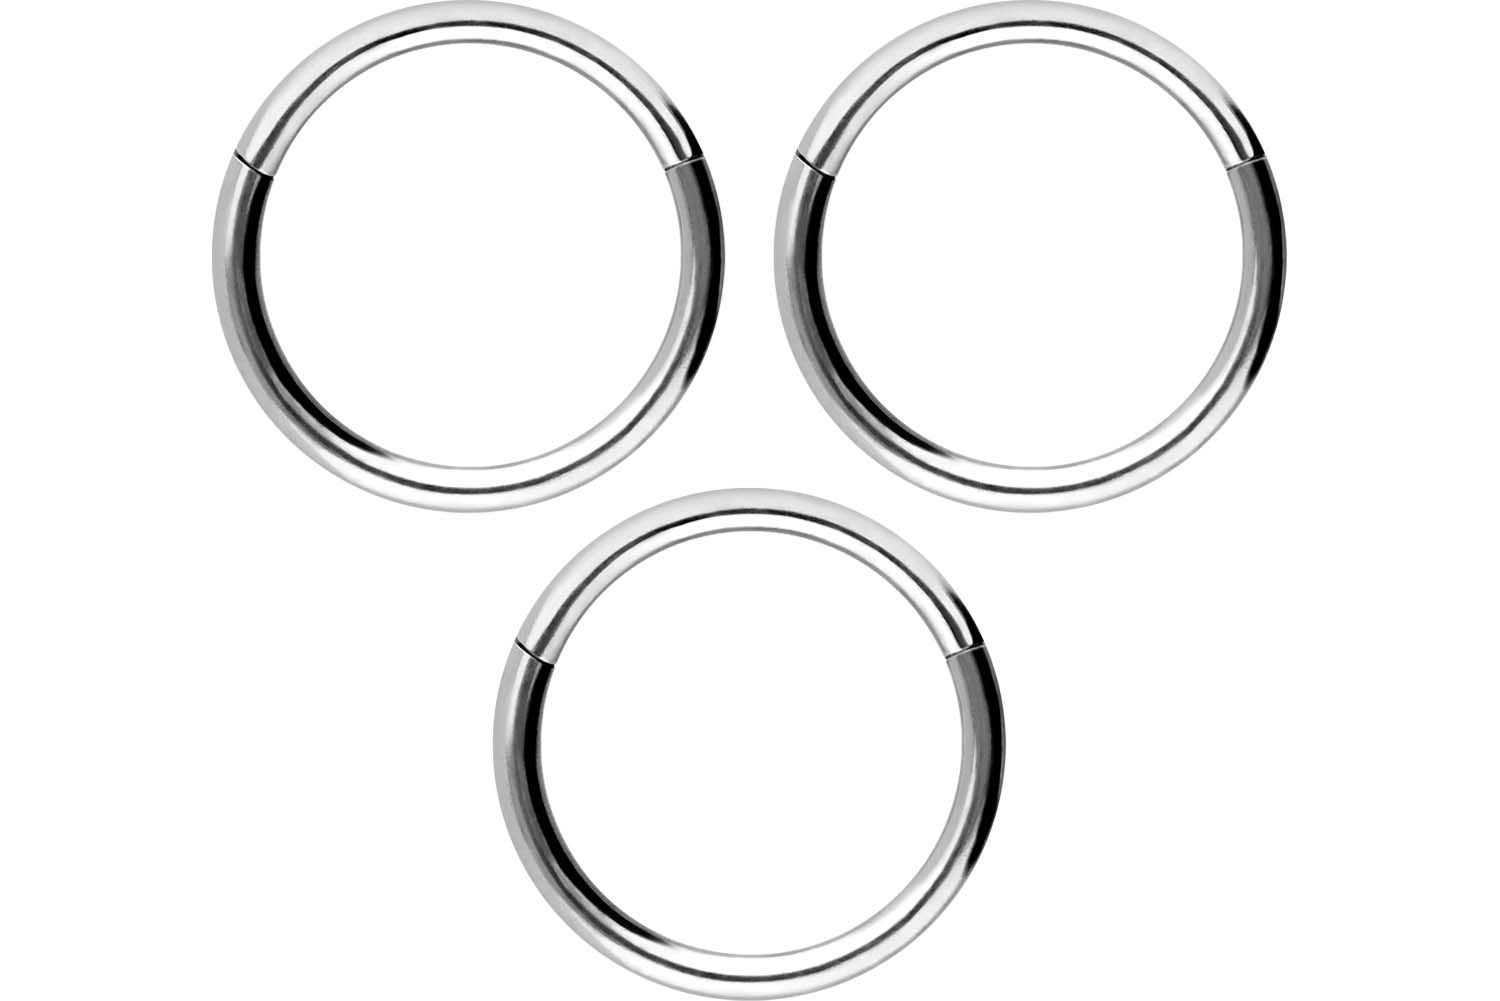 SET Surgical steel segment ring clicker